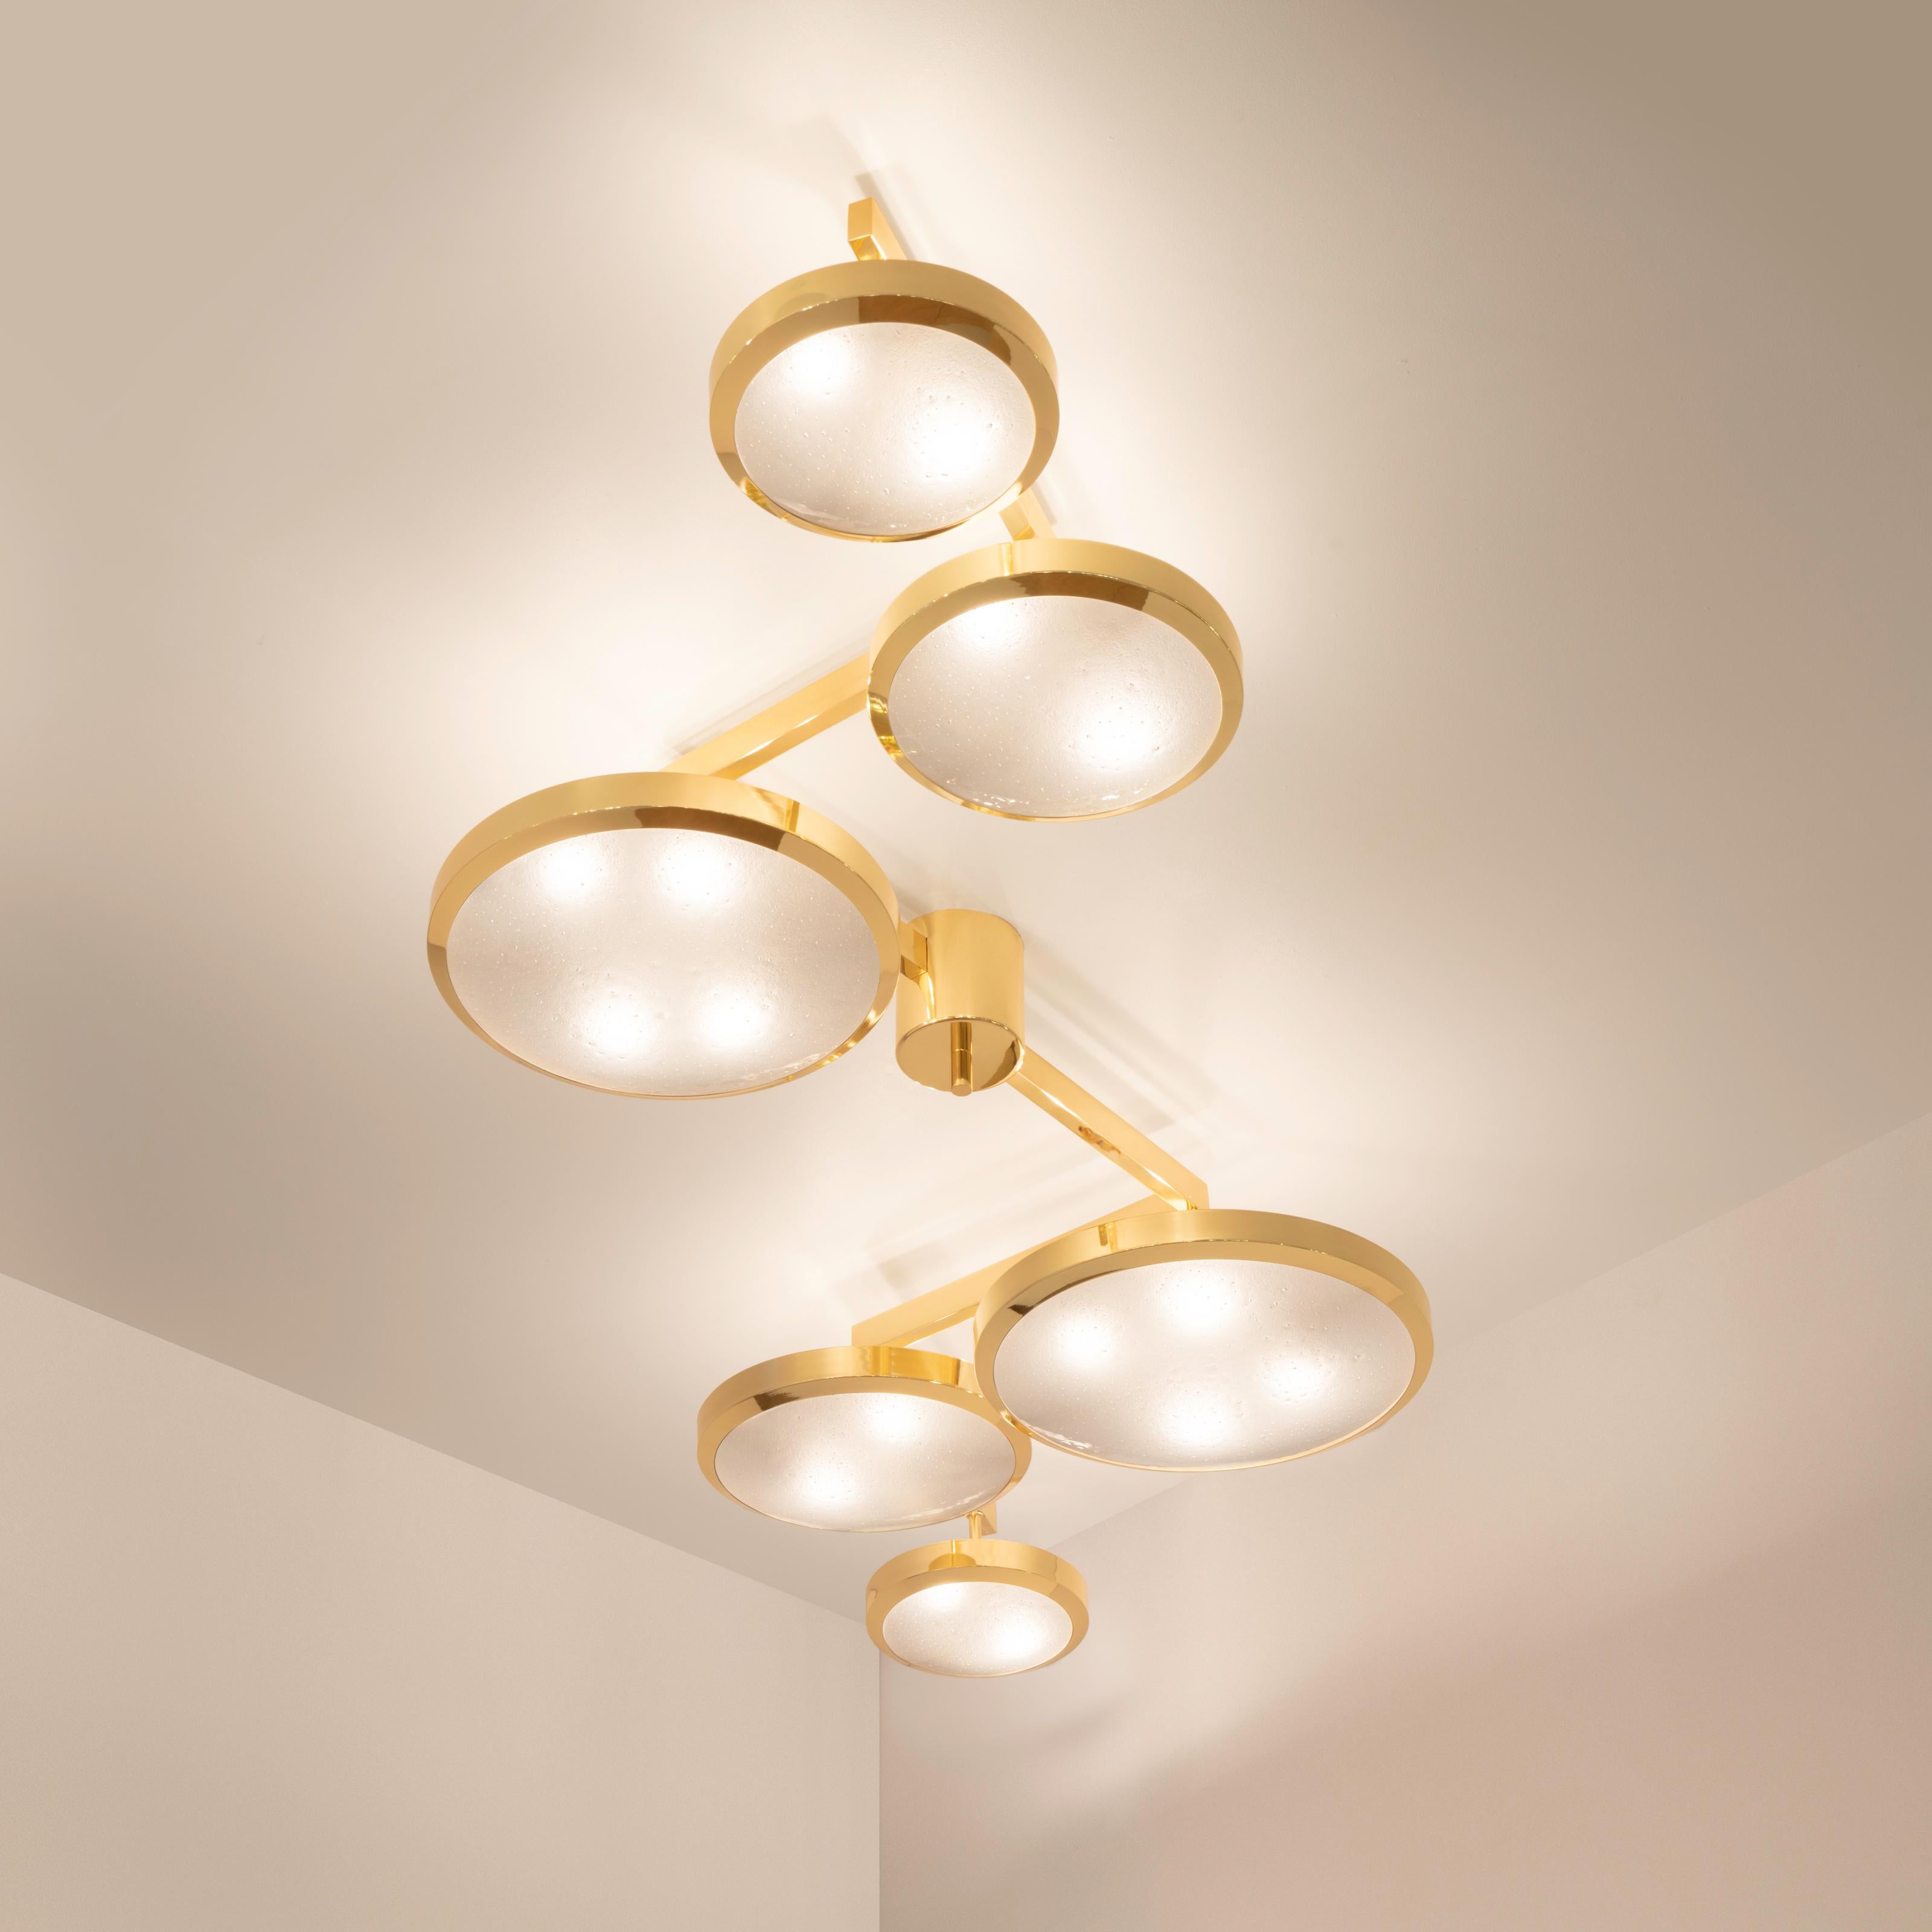 Geometria Sospesa Ceiling Light by Gaspare Asaro-Brunito Nero Finish In New Condition For Sale In New York, NY